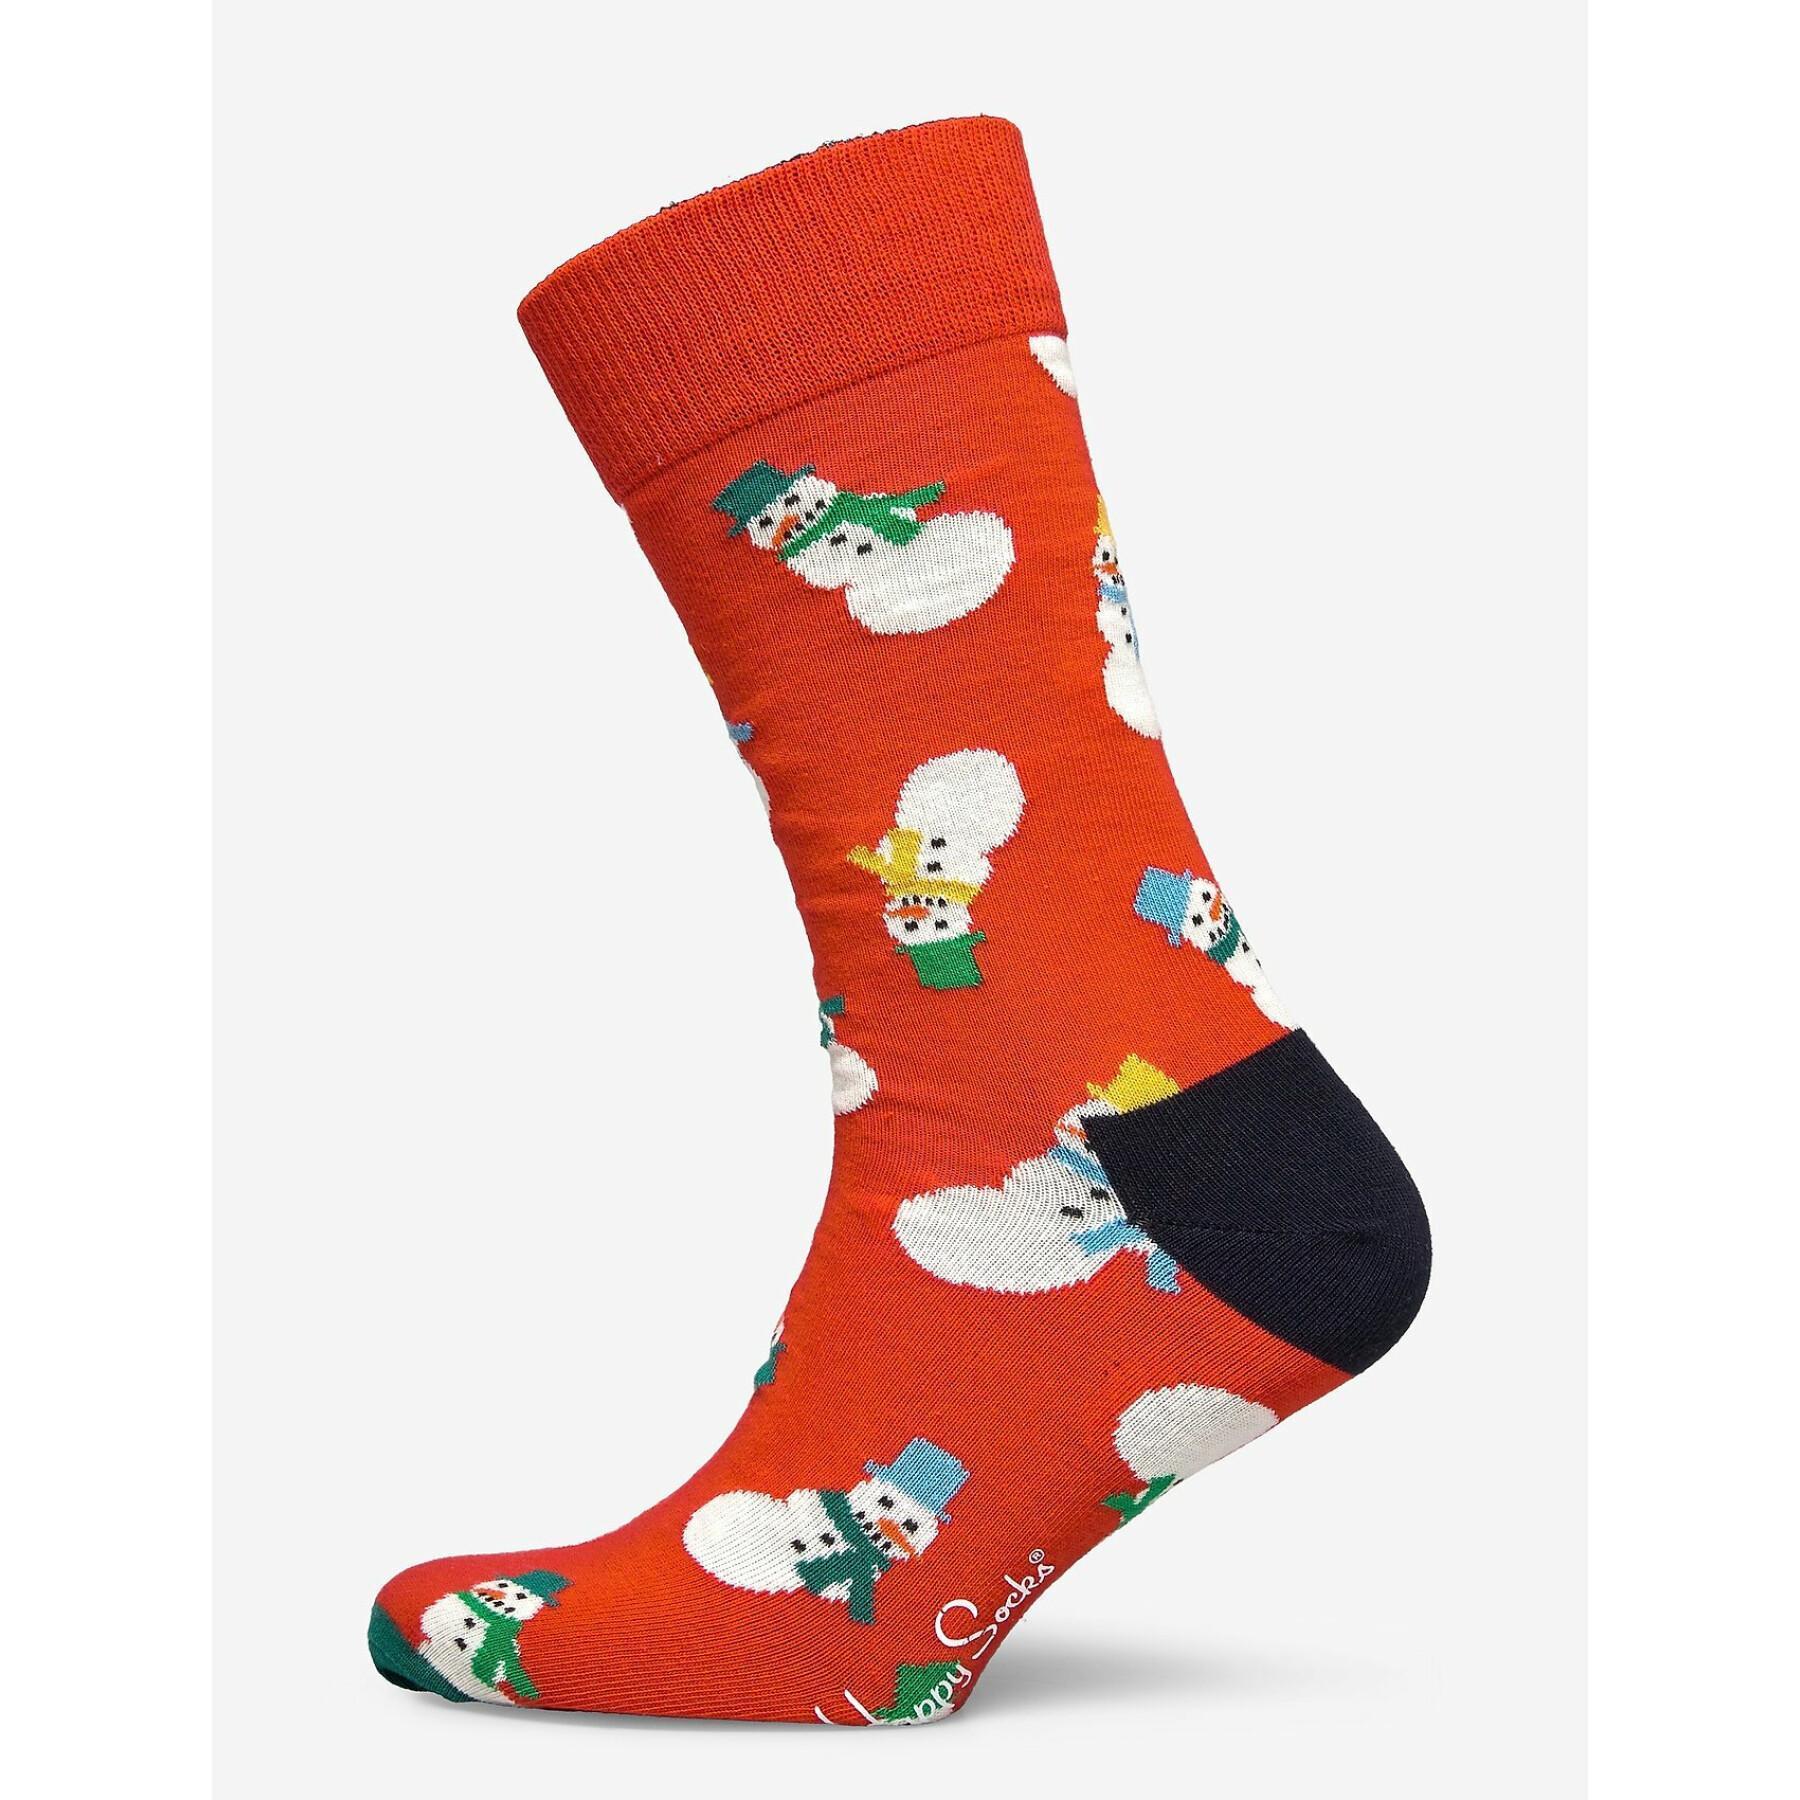 Meias Happy socks Snowman